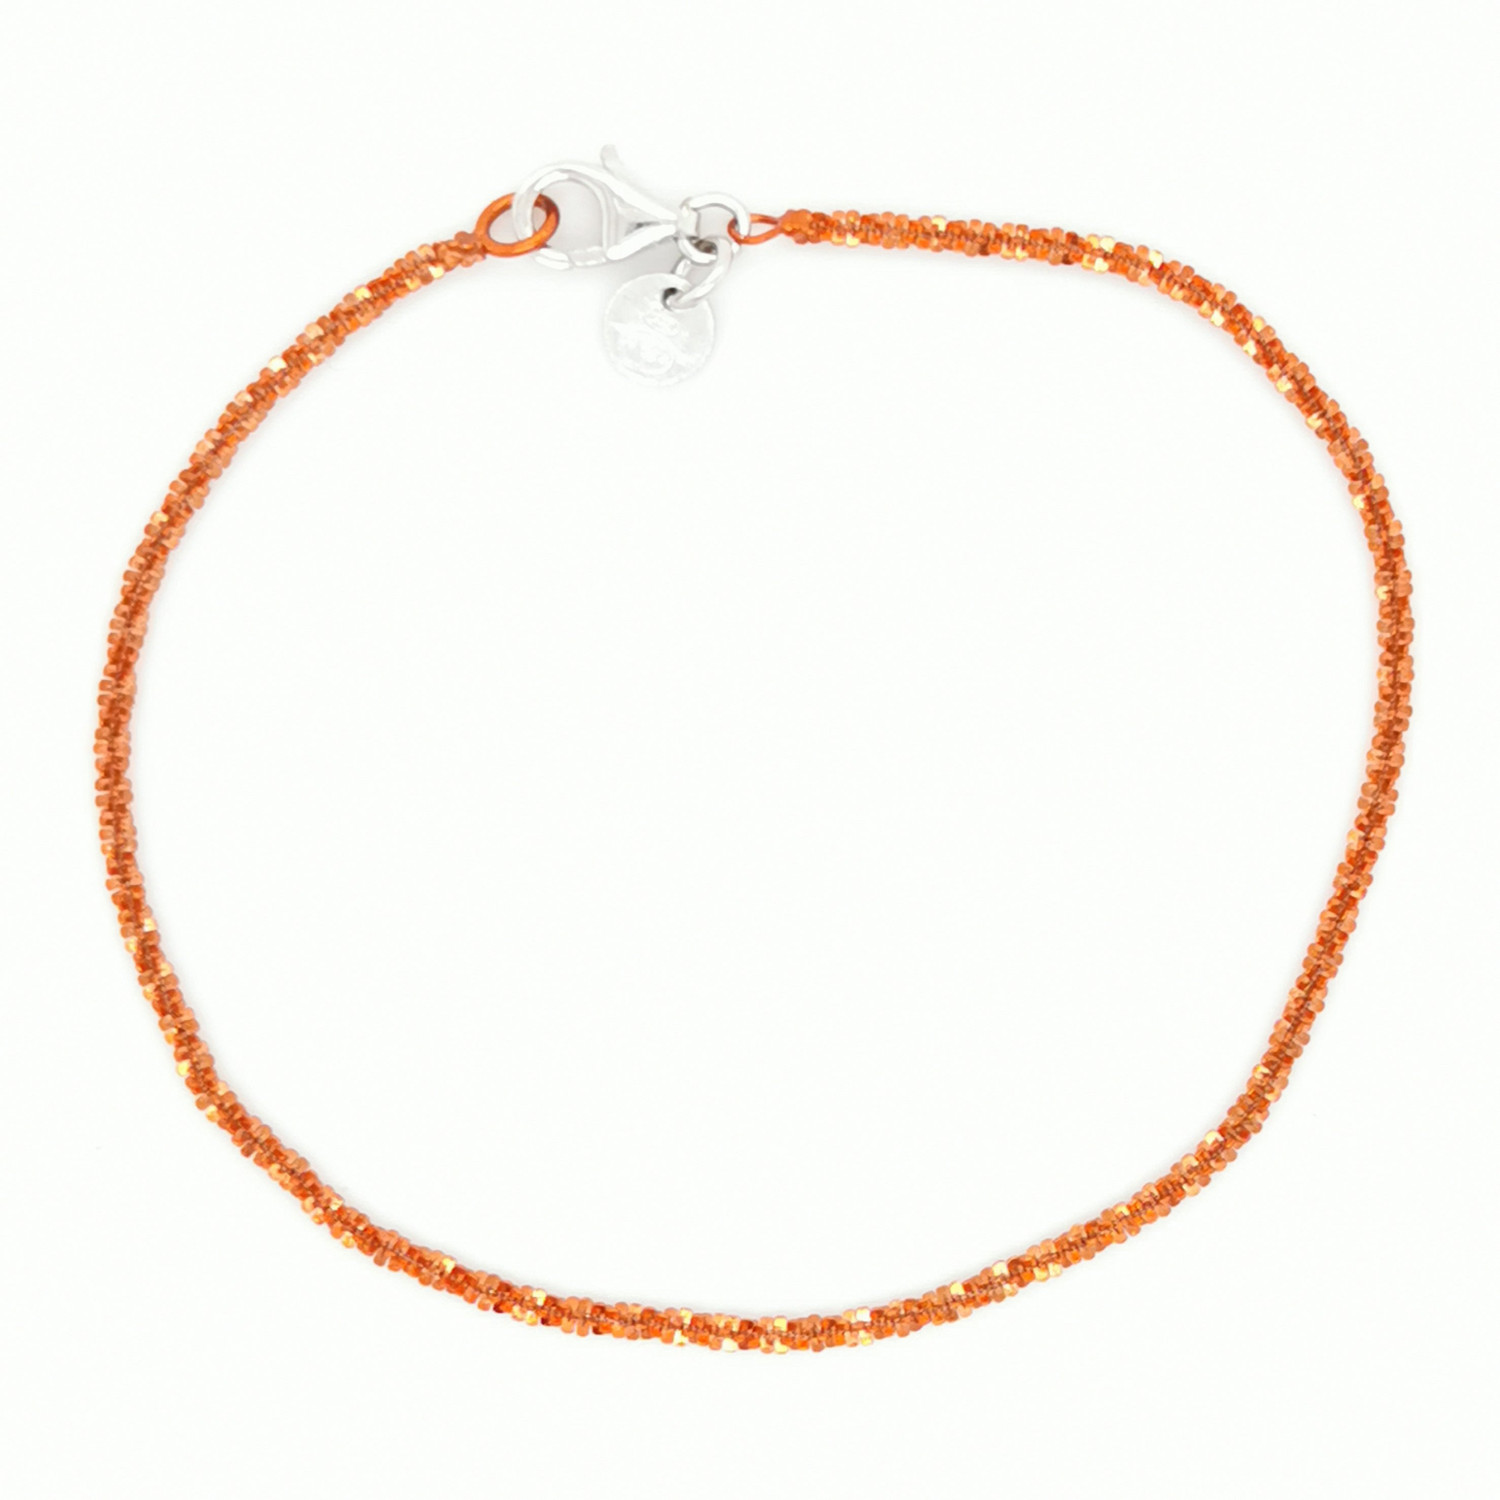 Bracelet Elden argent 925/1000 1 rang orange
collection Catch the Rainbow